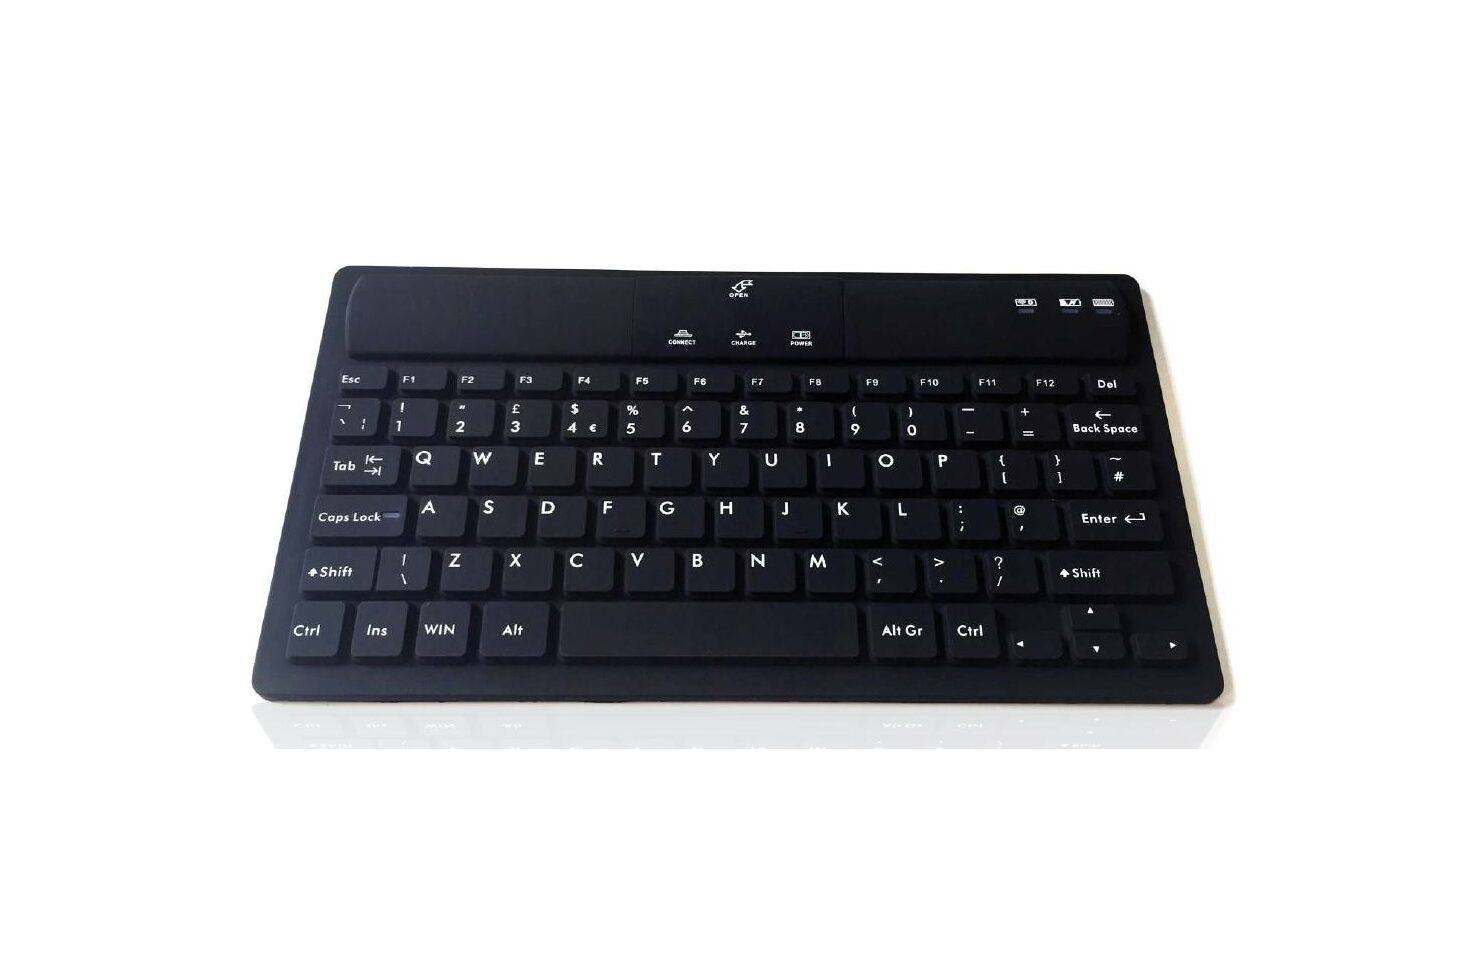 PCPE-ACDSUK1 Keyboards